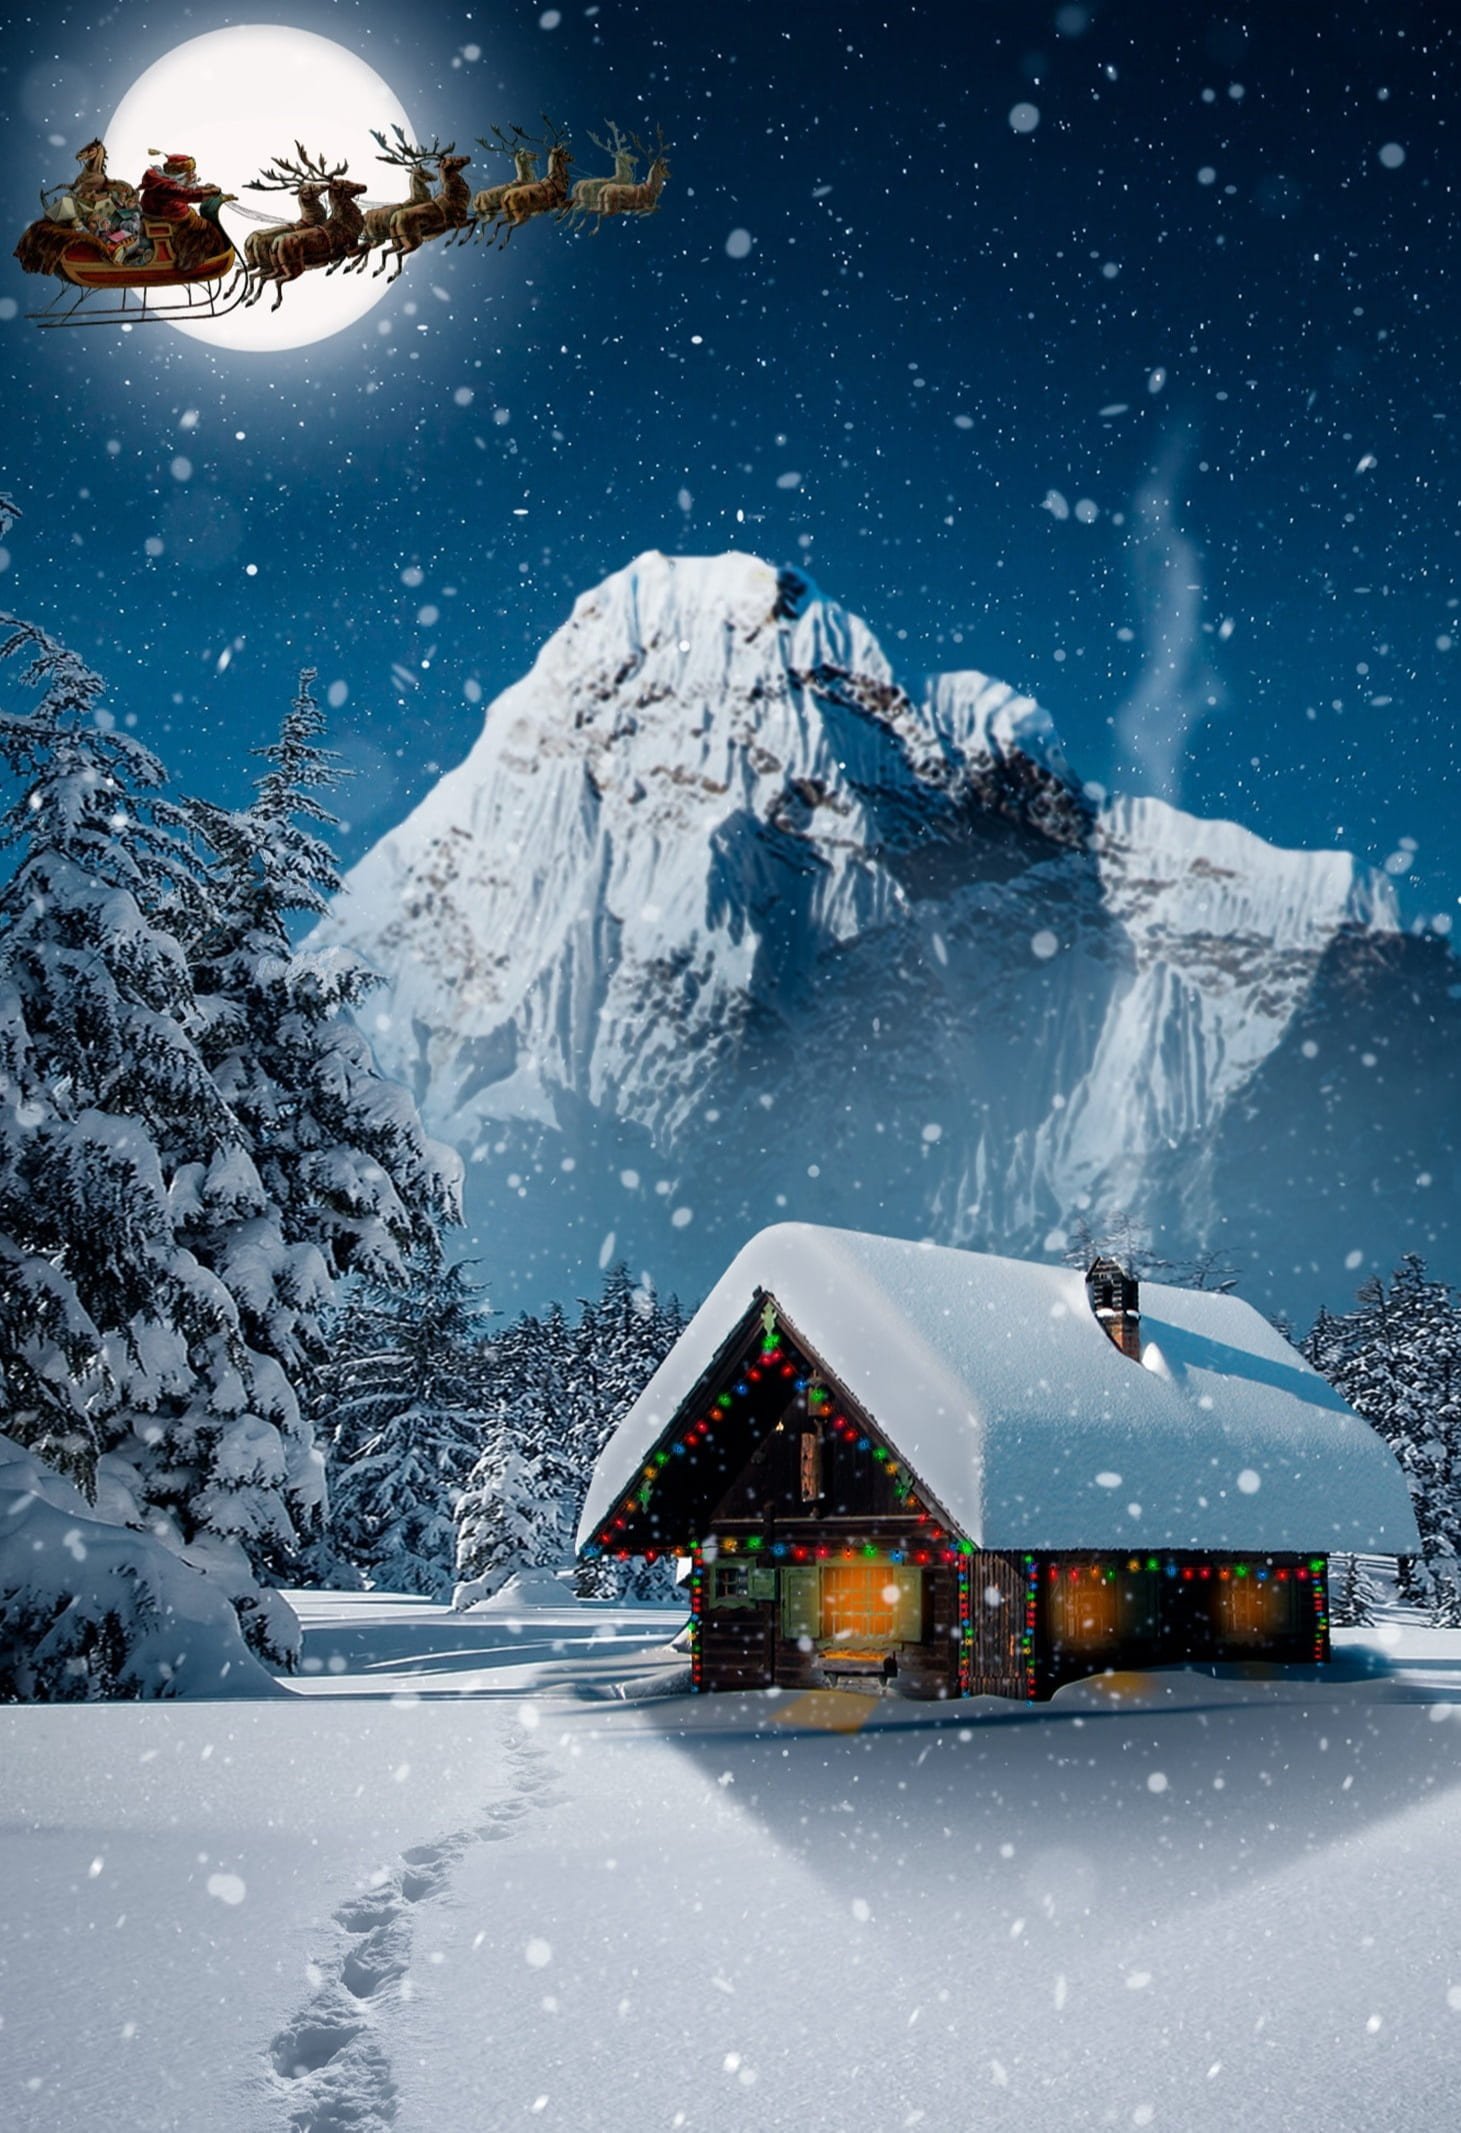 HD wallpaper Christmas Winter 4K Holidays Landscape Night Design Fantasy christmas cards